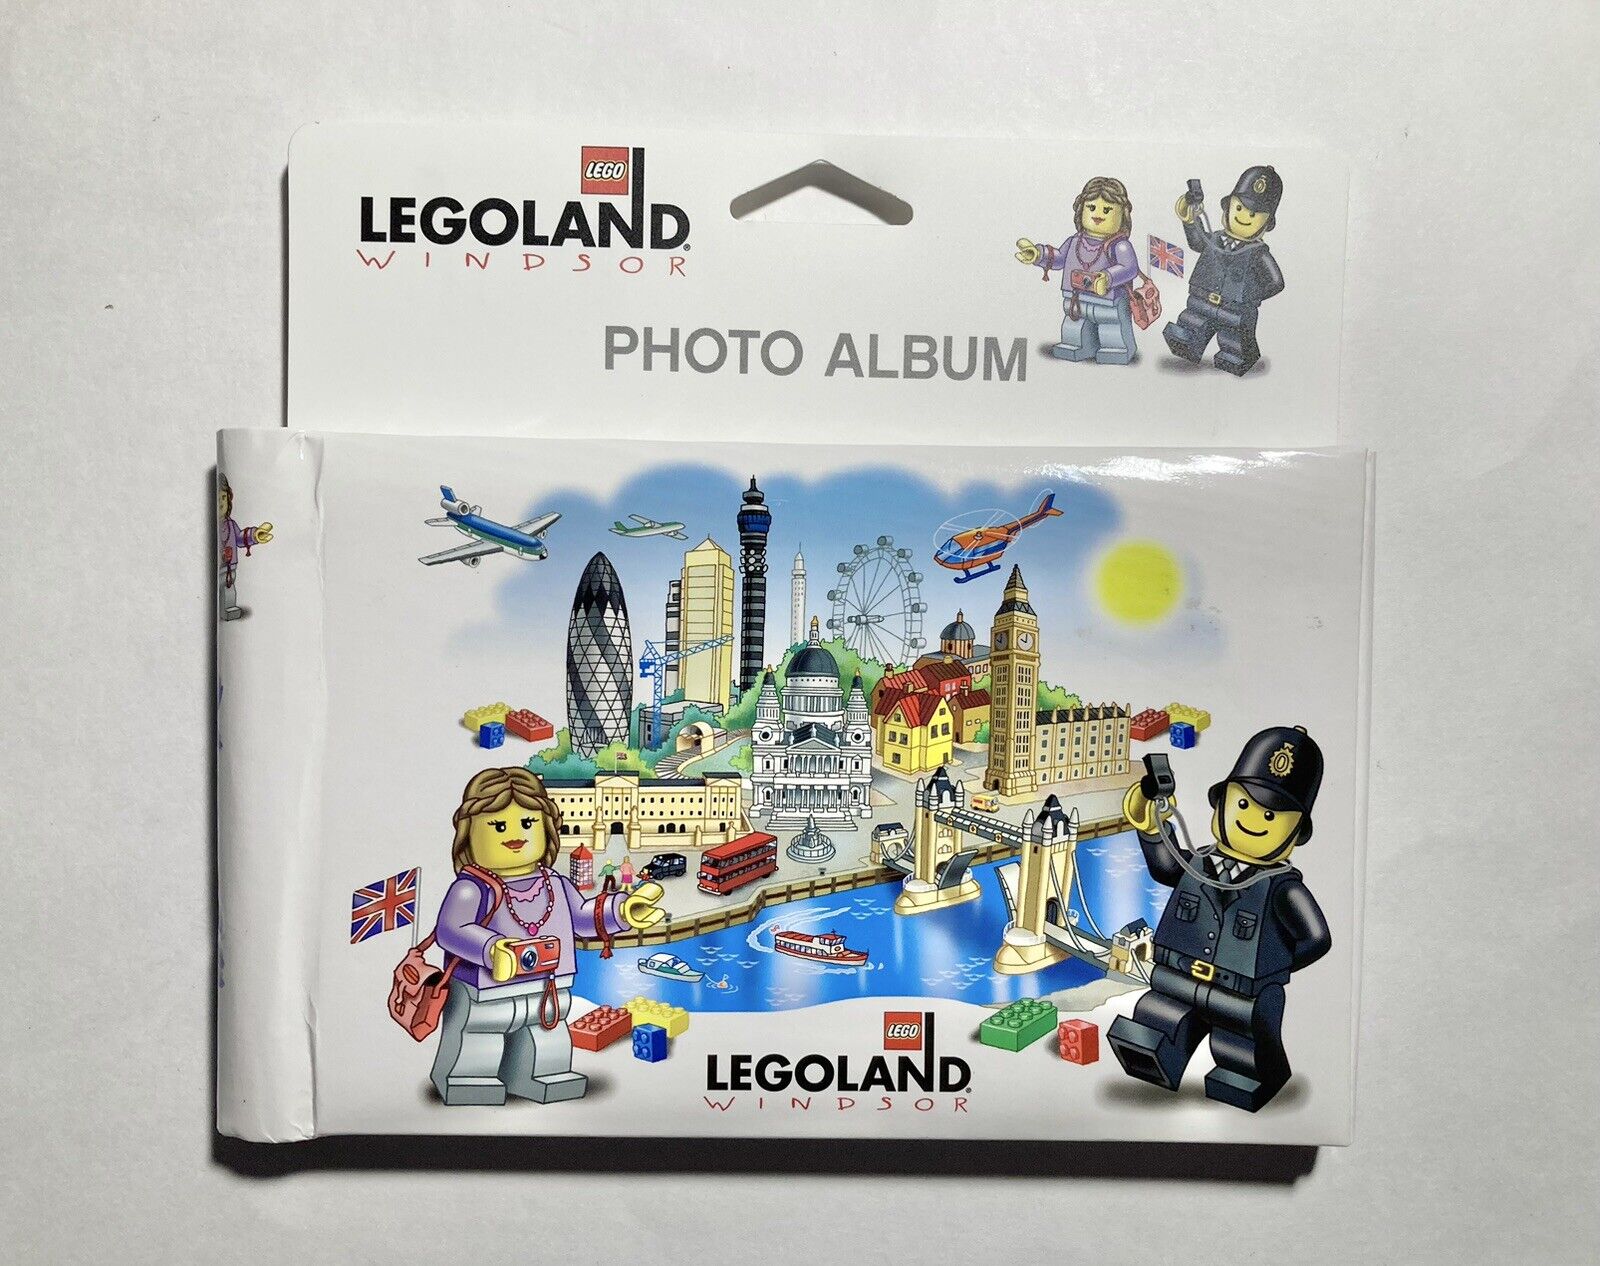 LEGO Official 2008 Legoland Windsor Photo Album Fits 20 4x6 Photos Brand New